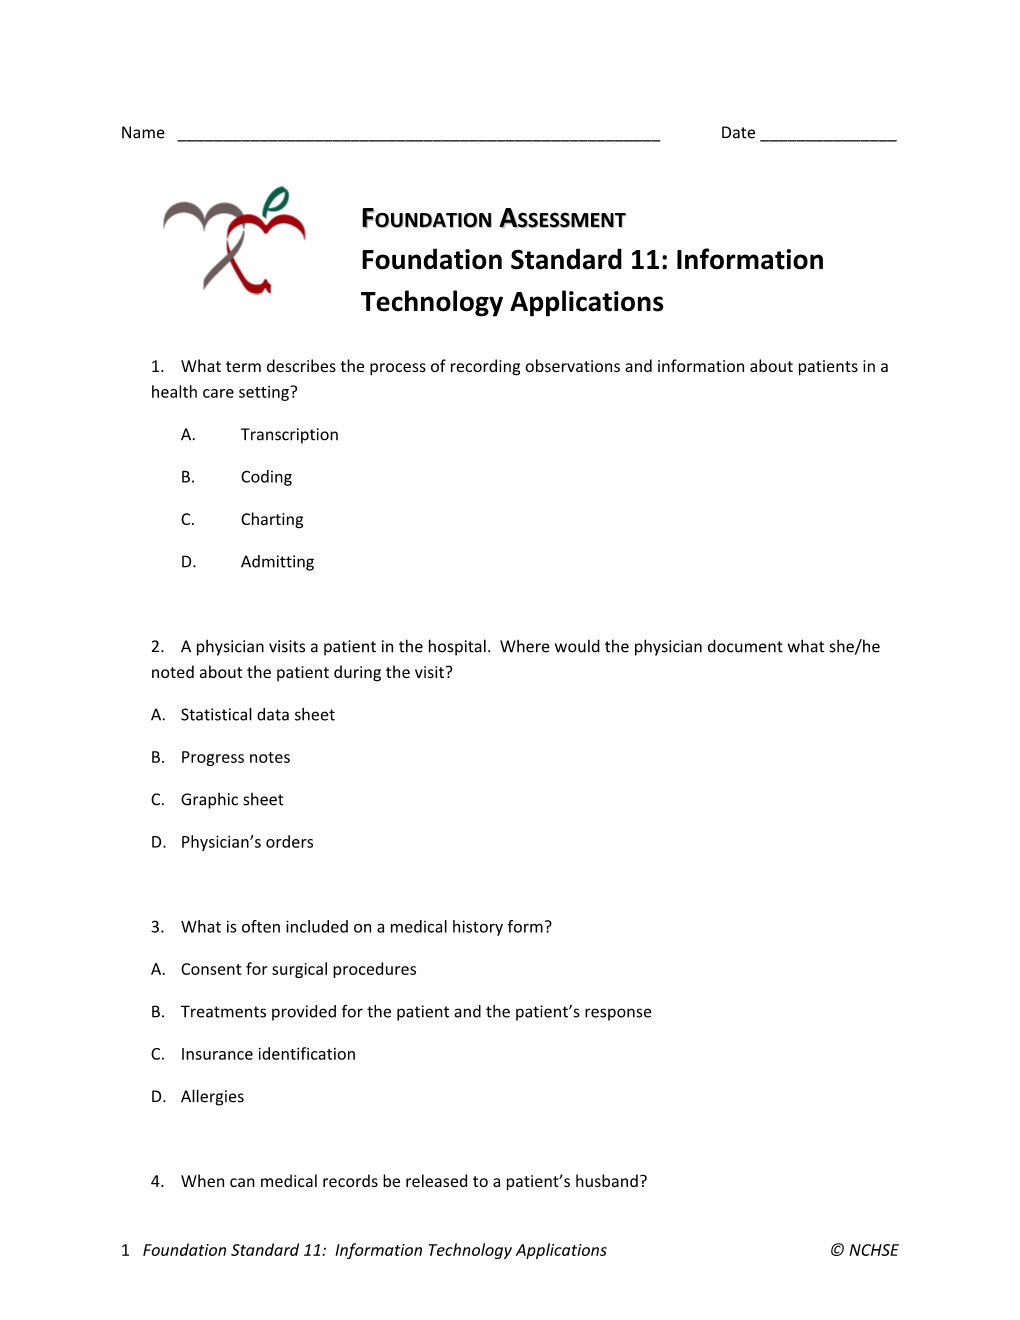 Foundation Standard 11: Information Technology Applications